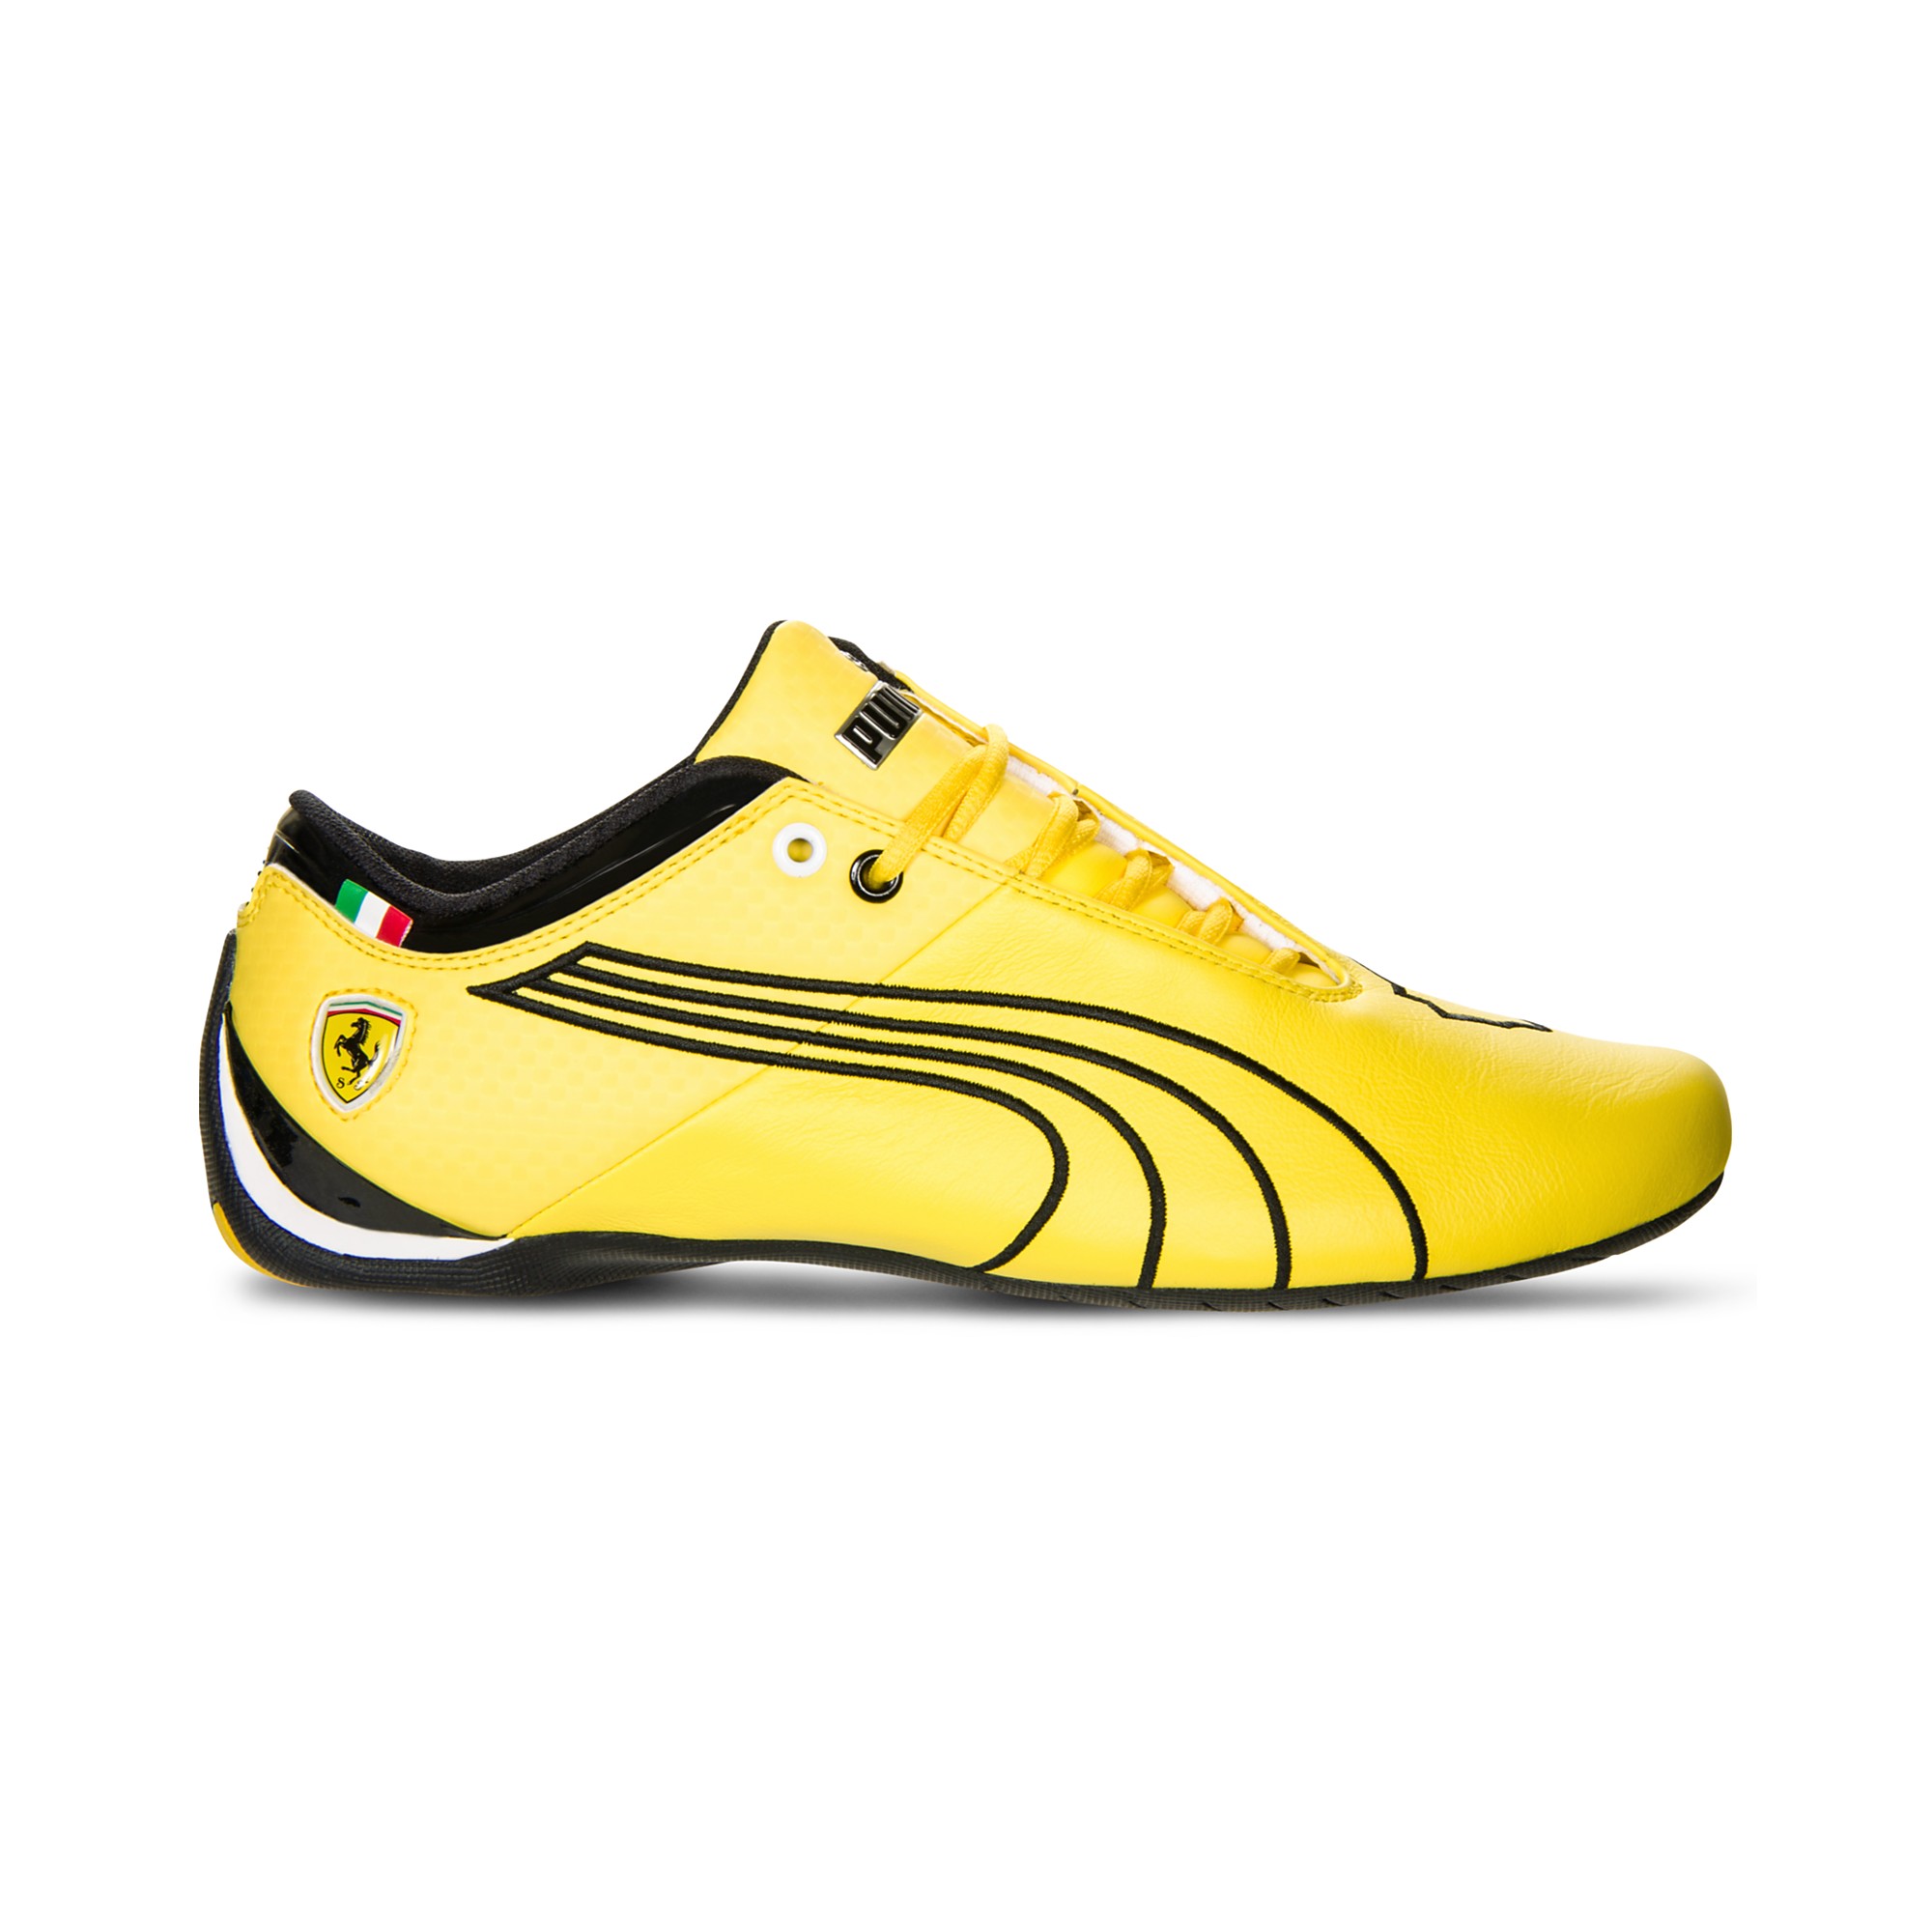 PUMA Future Cat M1 Big Sf Nm Sneakers in Yellow for Men - Lyst